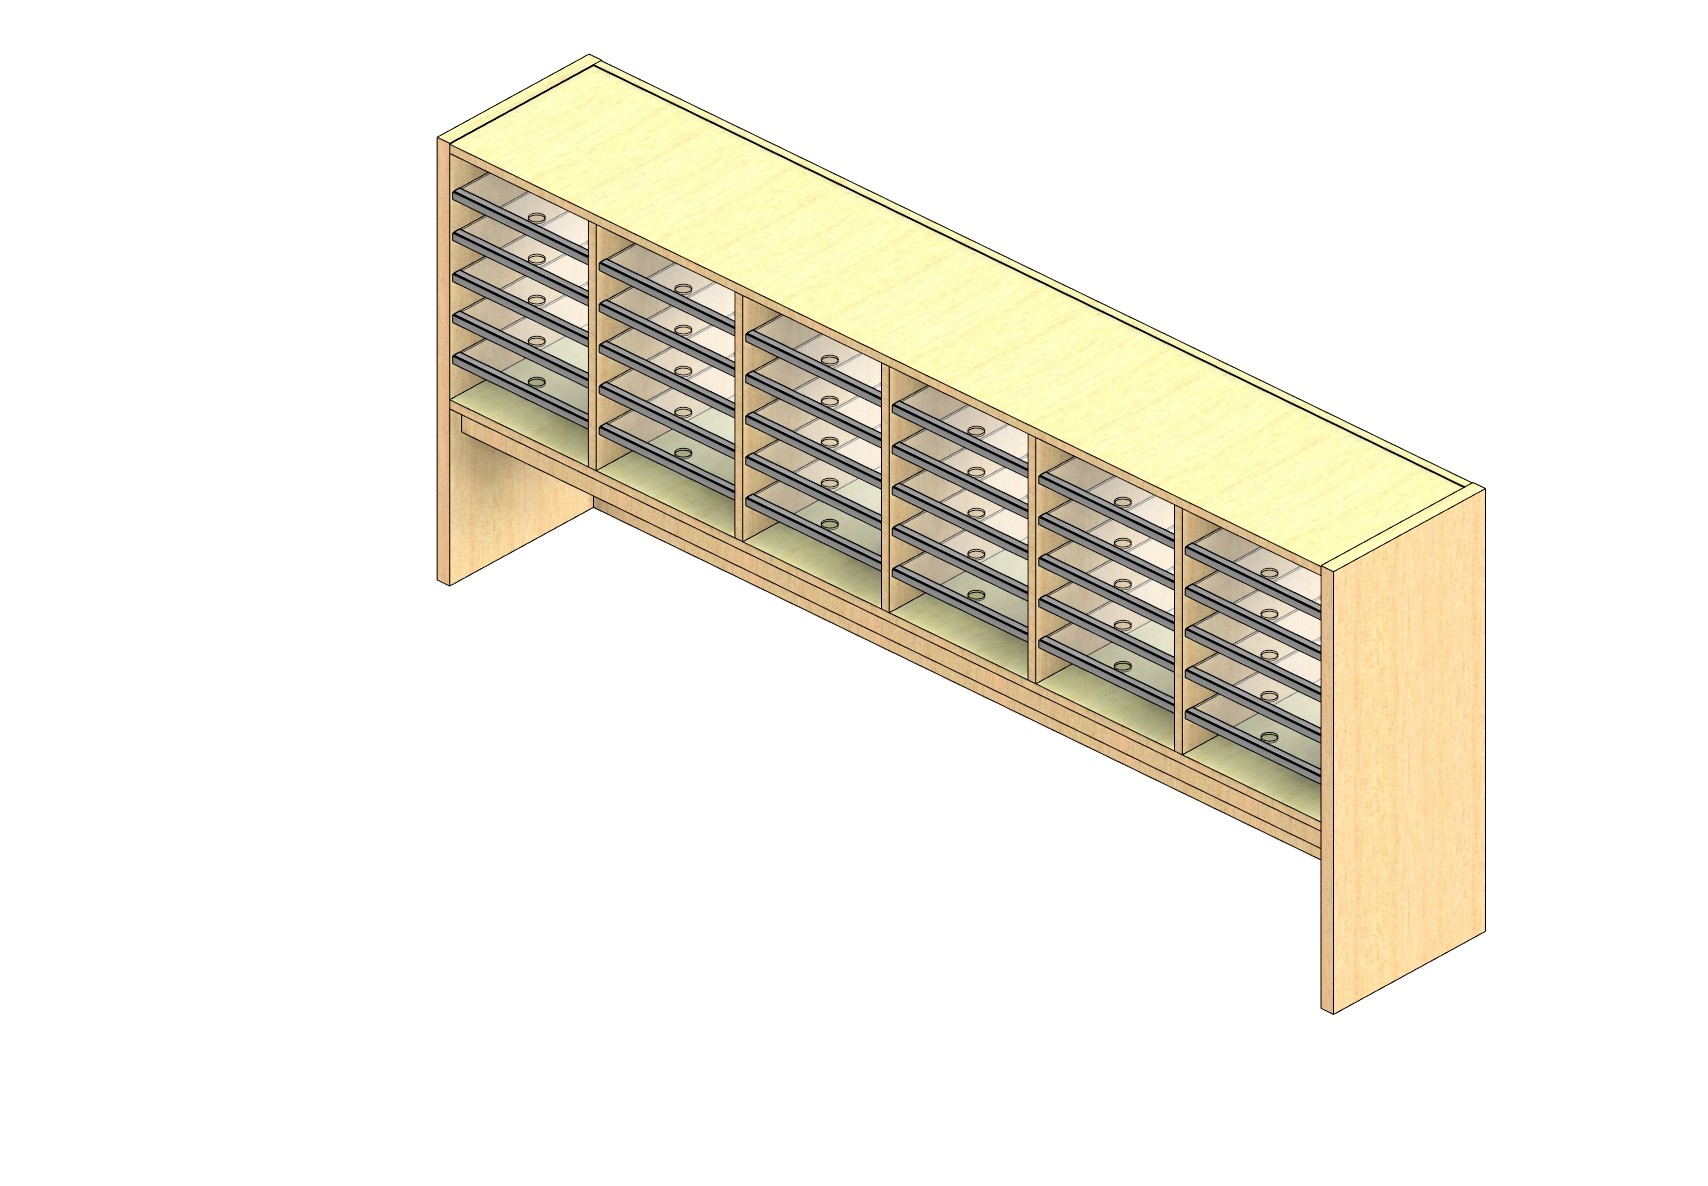 Standard Sized Plexi Back Sort Module - 6 Columns - 18" Sorting Height w/ 12" Riser